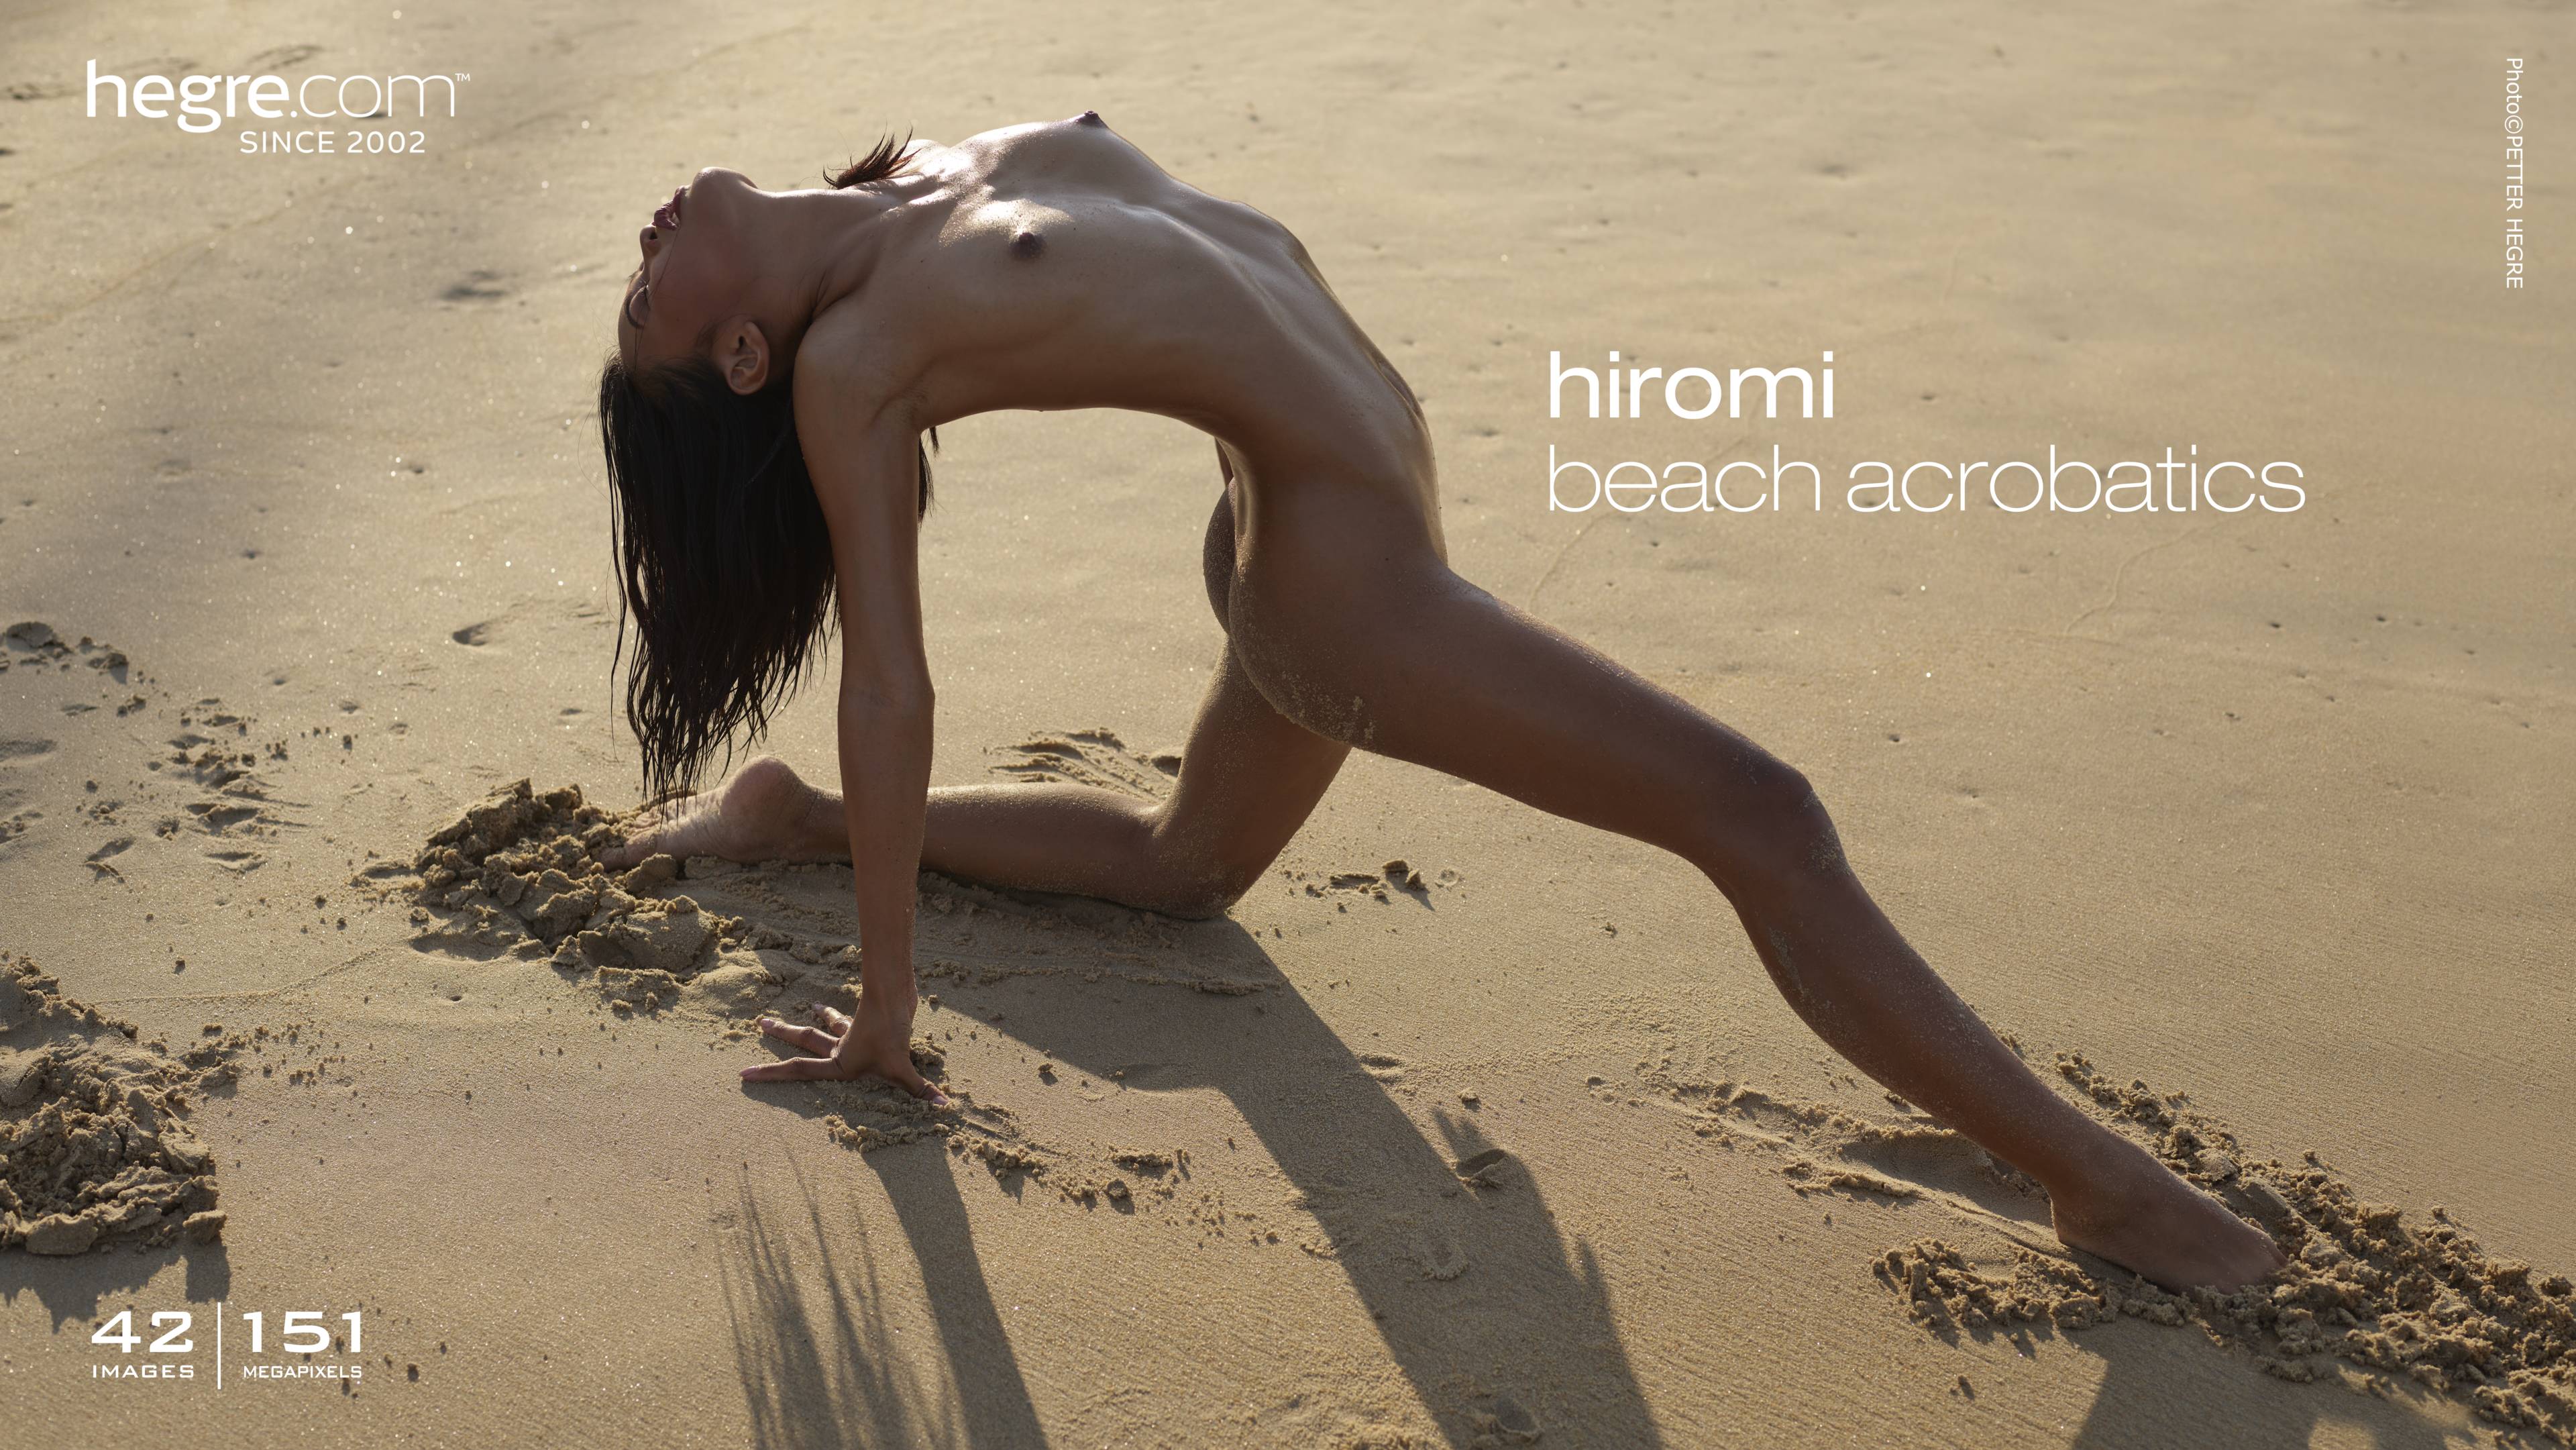 hiromi beach acrobatics board